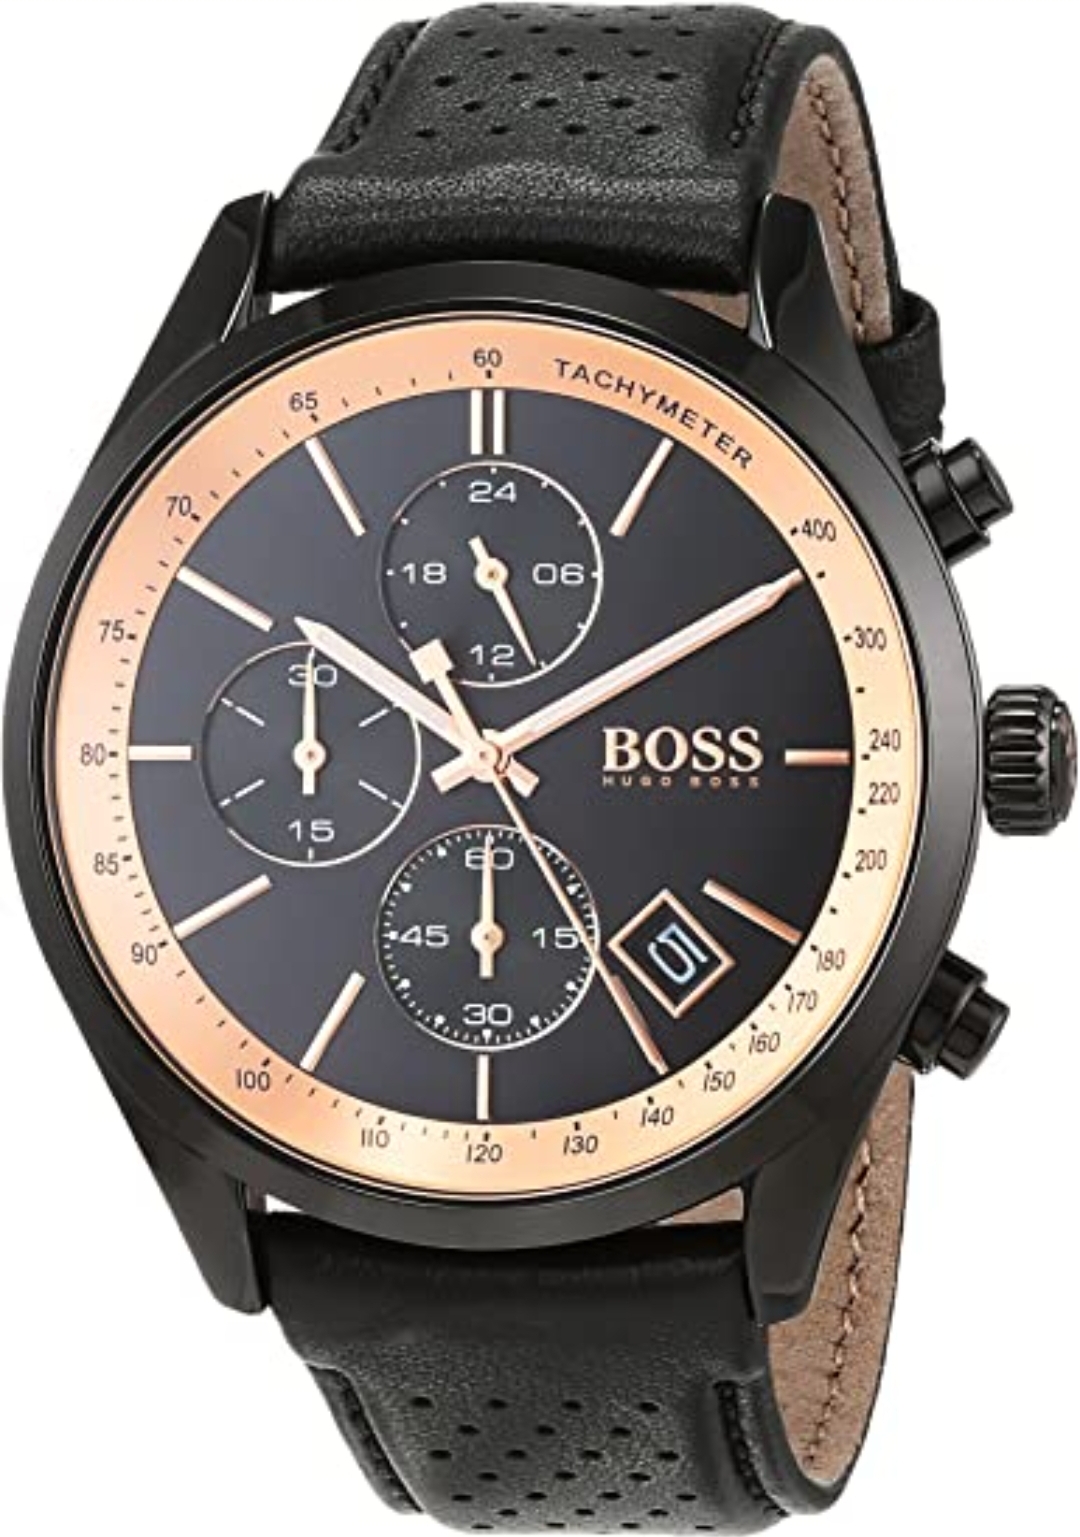 Hugo Boss Grand Prix Watch 1513550 - Image 2 of 8